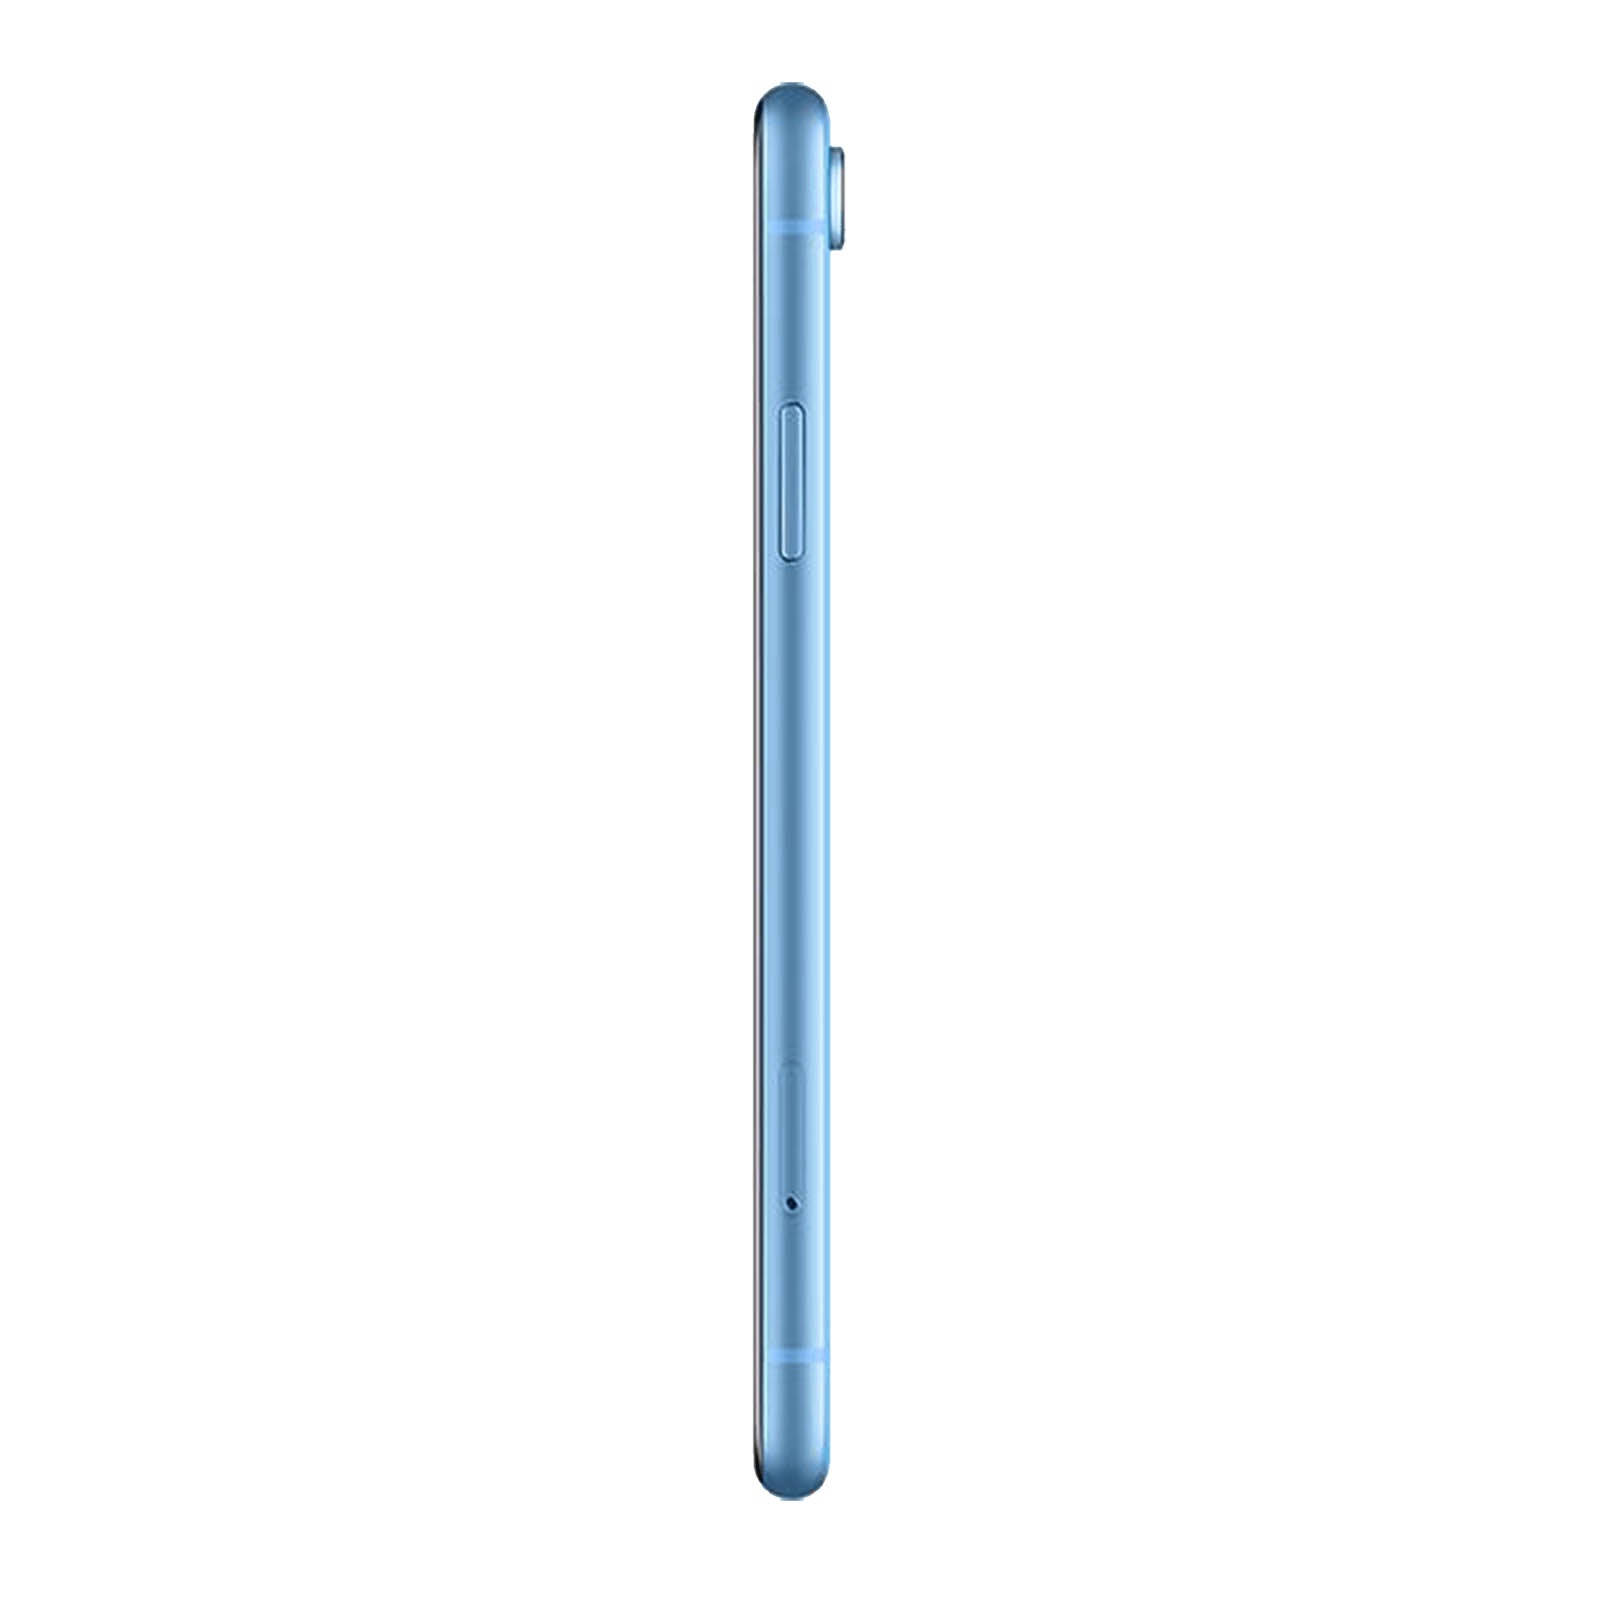 iPhone XR 128 Go - Bleu - Débloqué - Etat correct